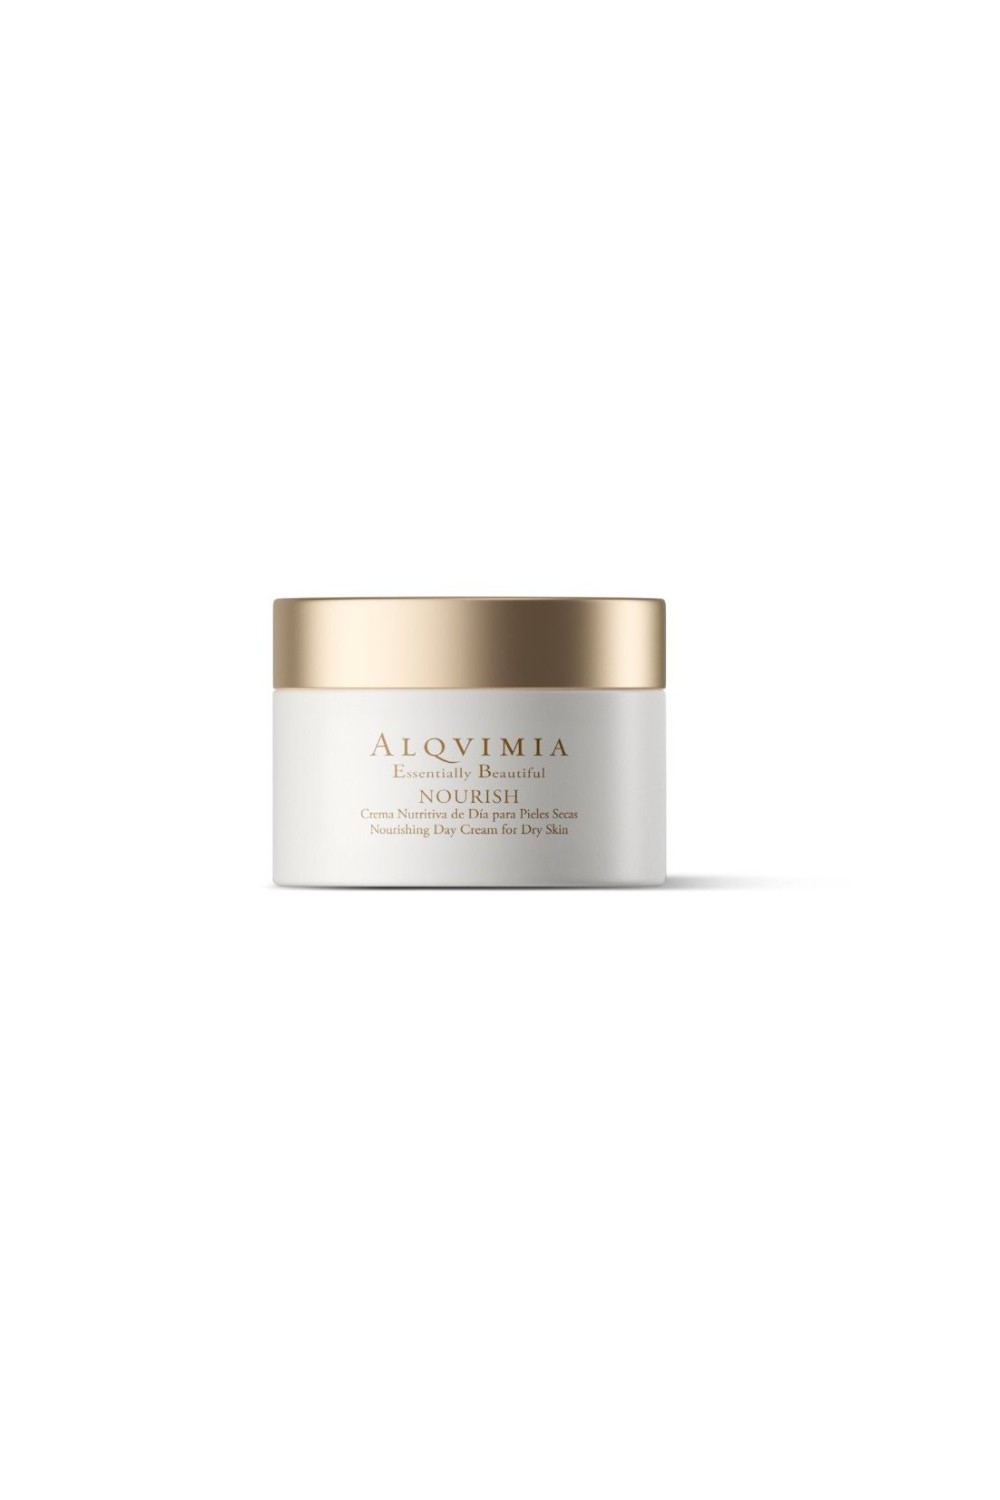 Alqvimia Essentially Beautiful Nourishing Day Cream For Dry Skin 50ml